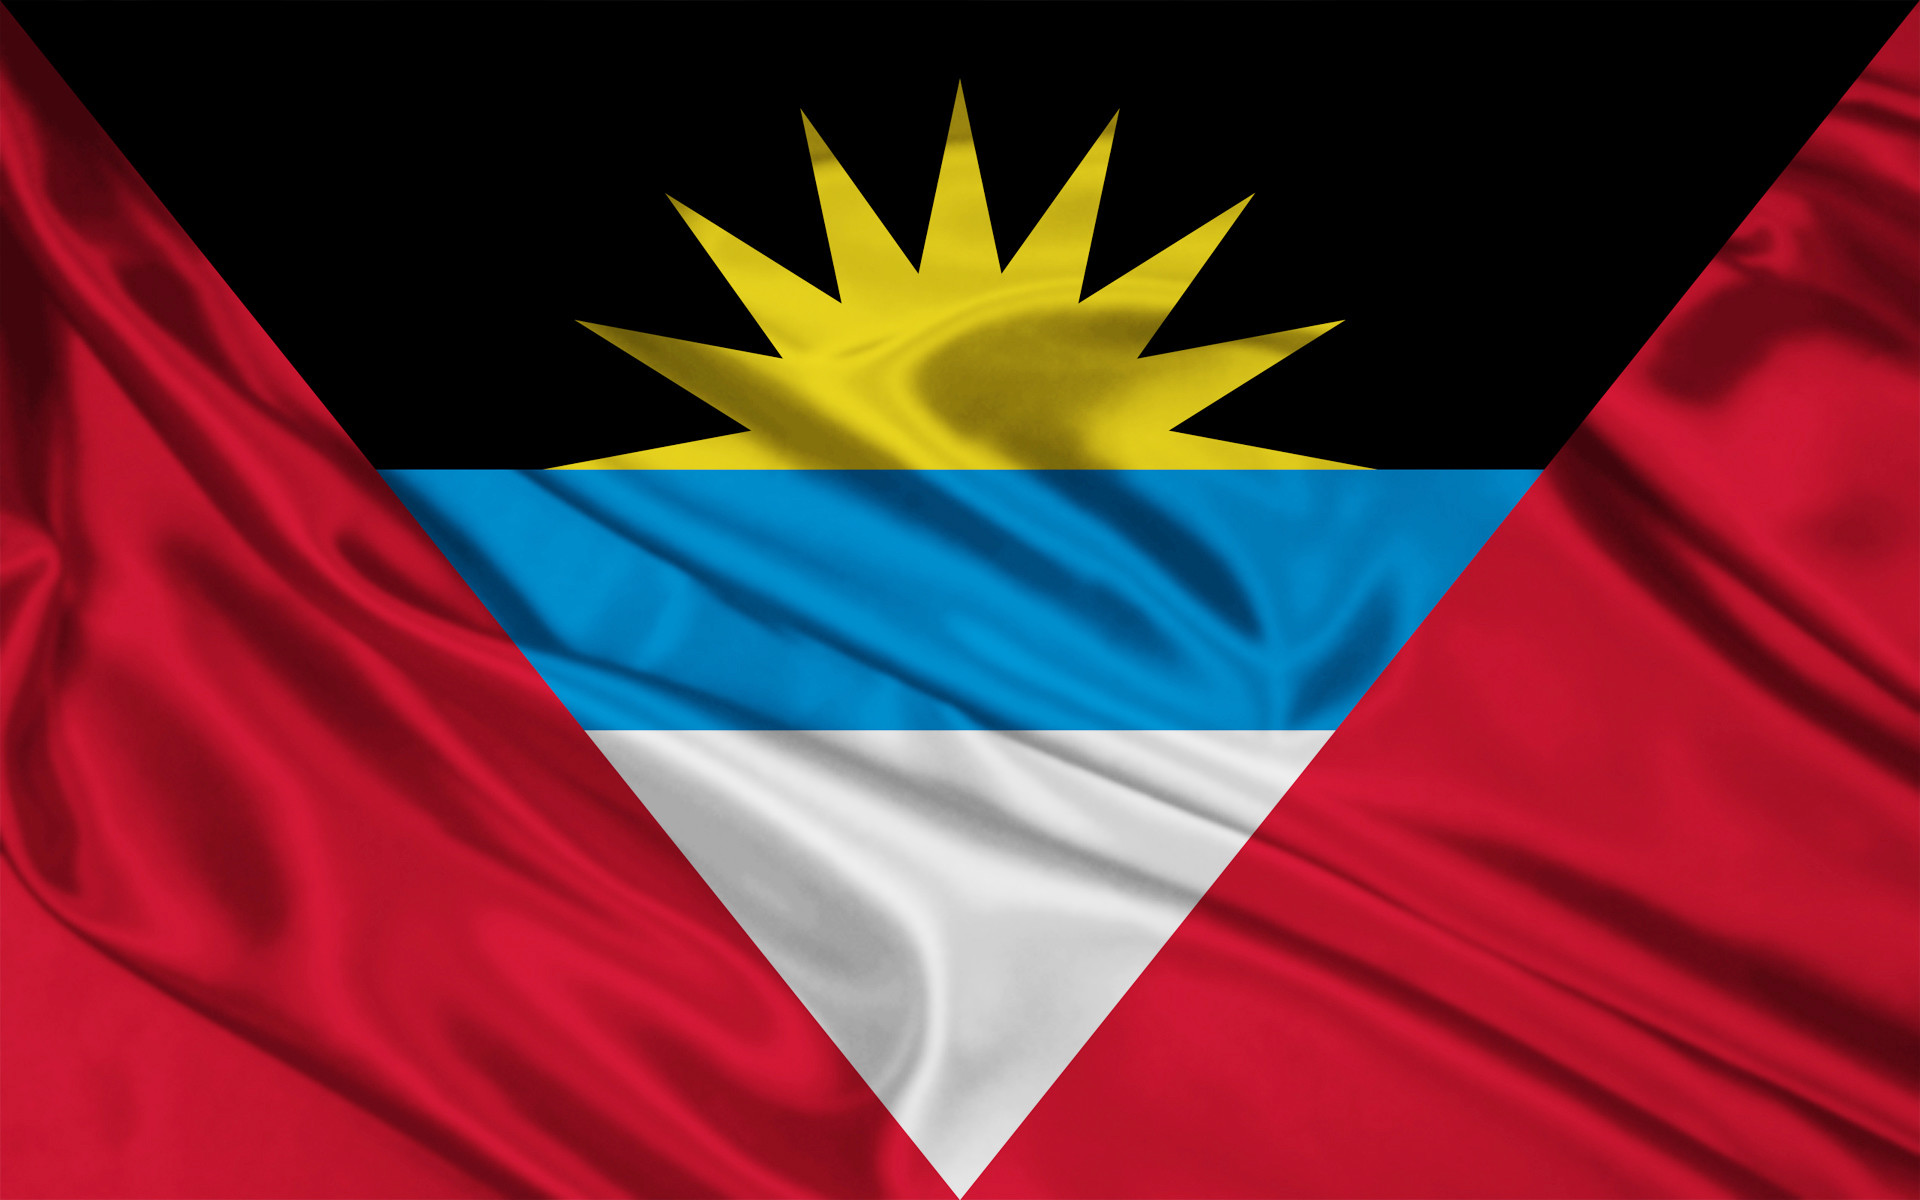 1920x1200 Antigua and Barbuda Flag wallpapers and stock photos